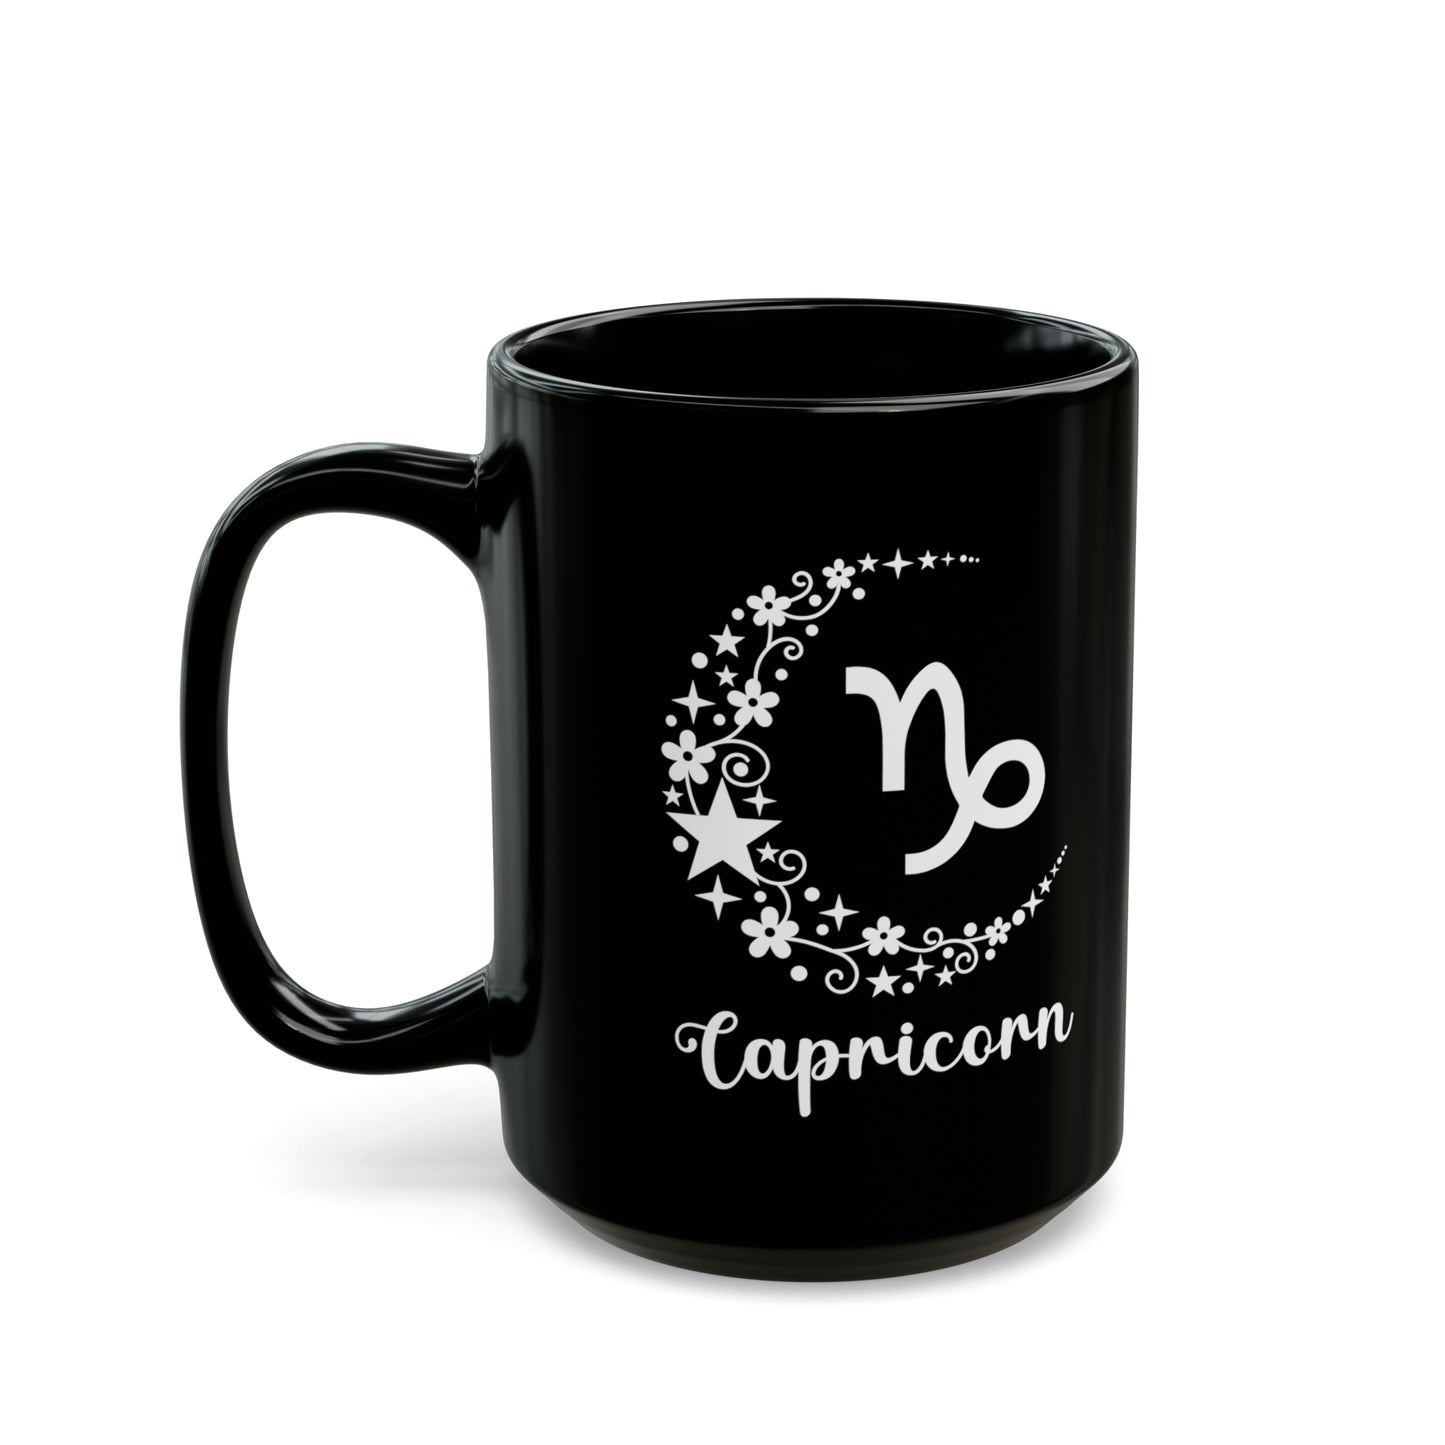 Capricorn crescent moon mug